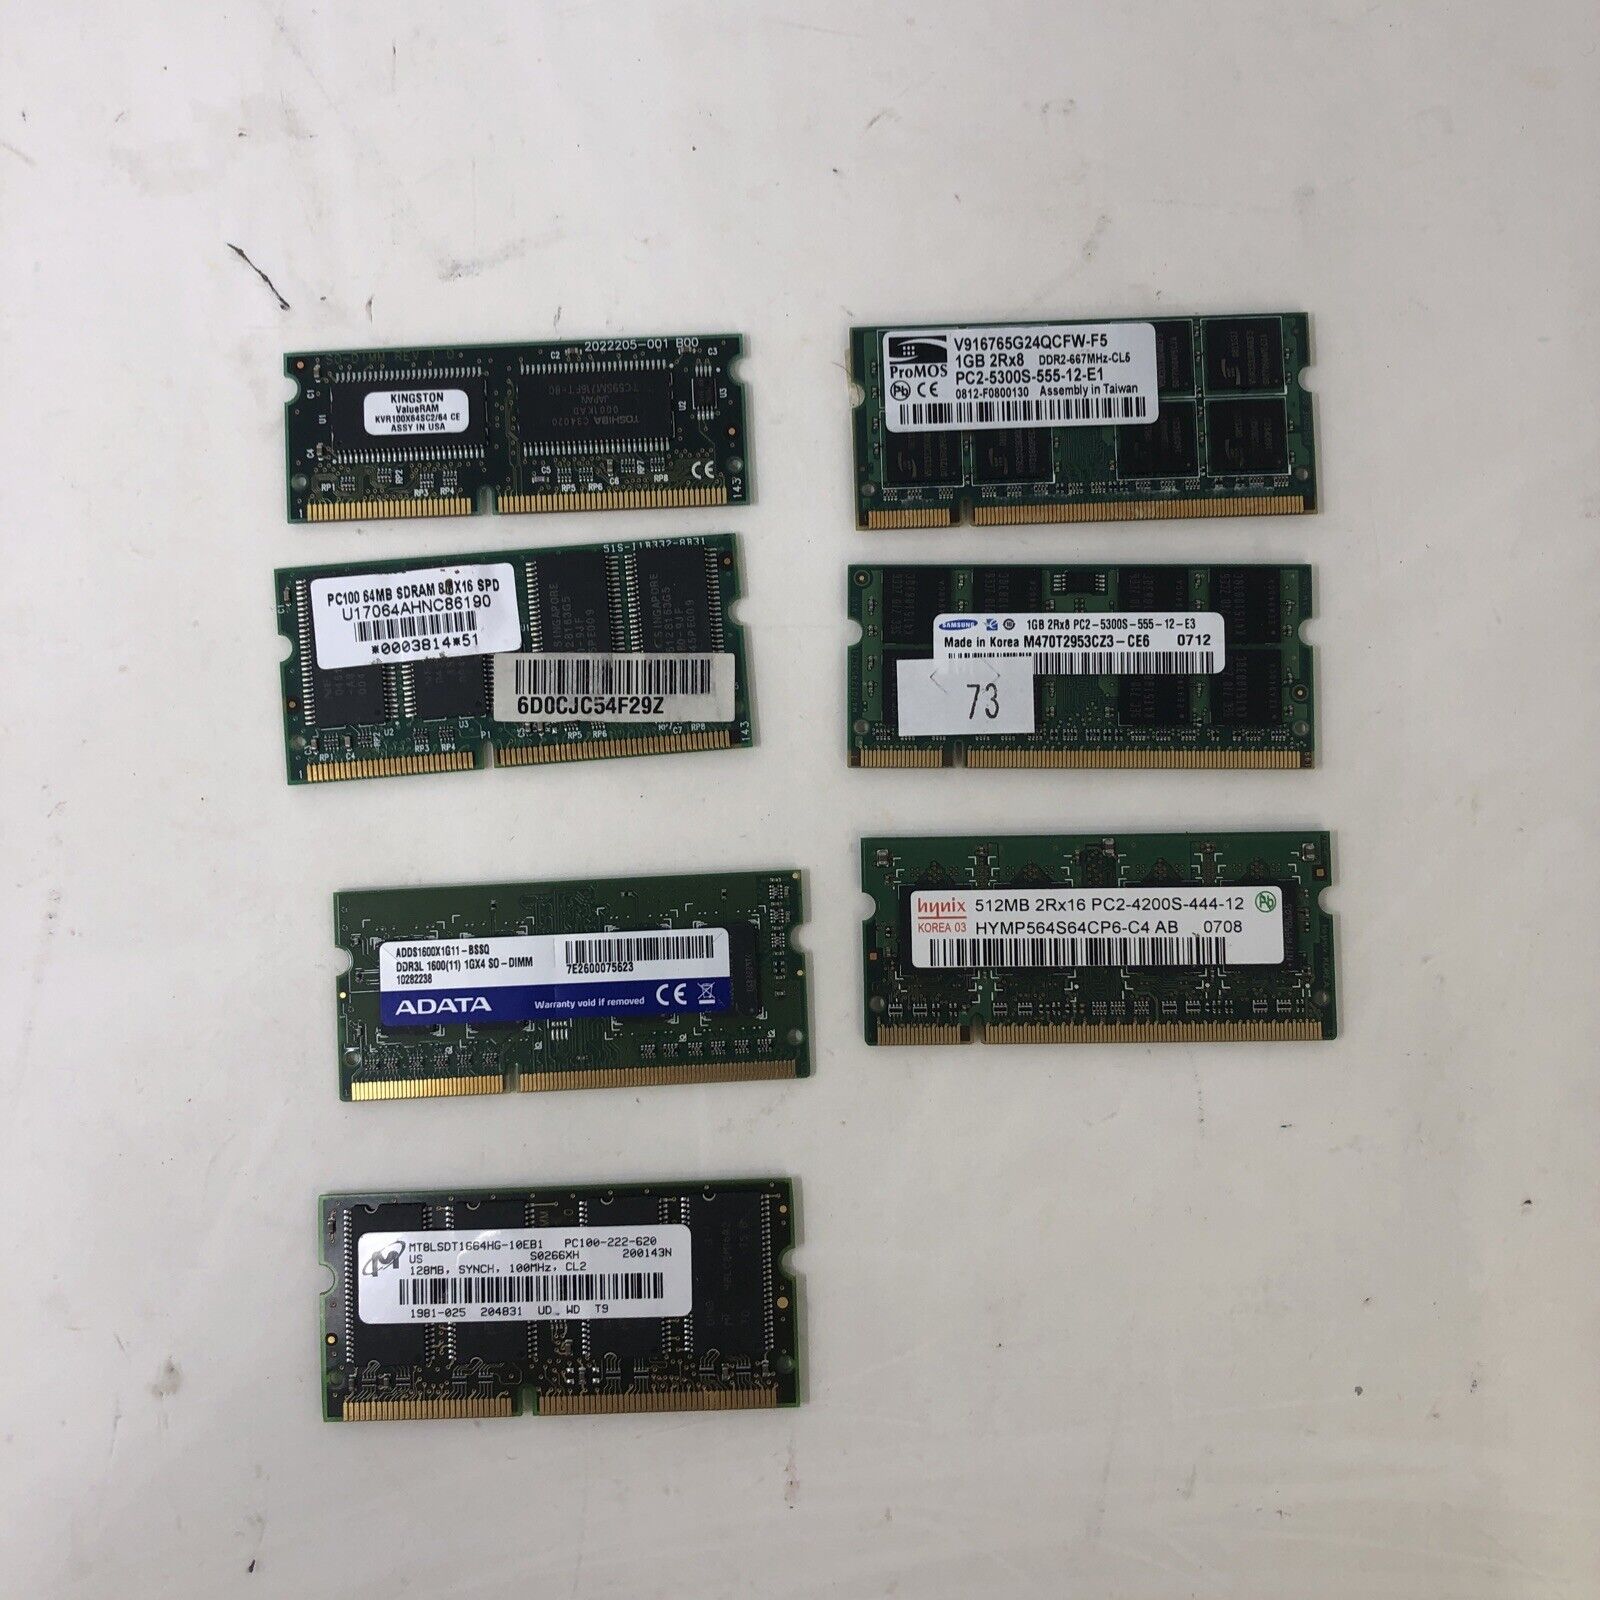 MIXED SAMSUNG HYNIX ADATA RAM LAPTOP 64MB-1GB 7 STICKS - USED